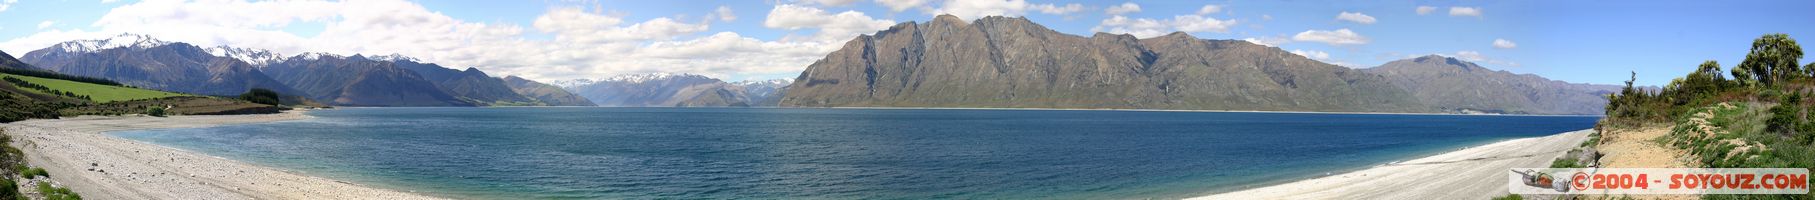 Lake Hawea - panorama
Mots-clés: New Zealand South Island panorama Lac Montagne Neige